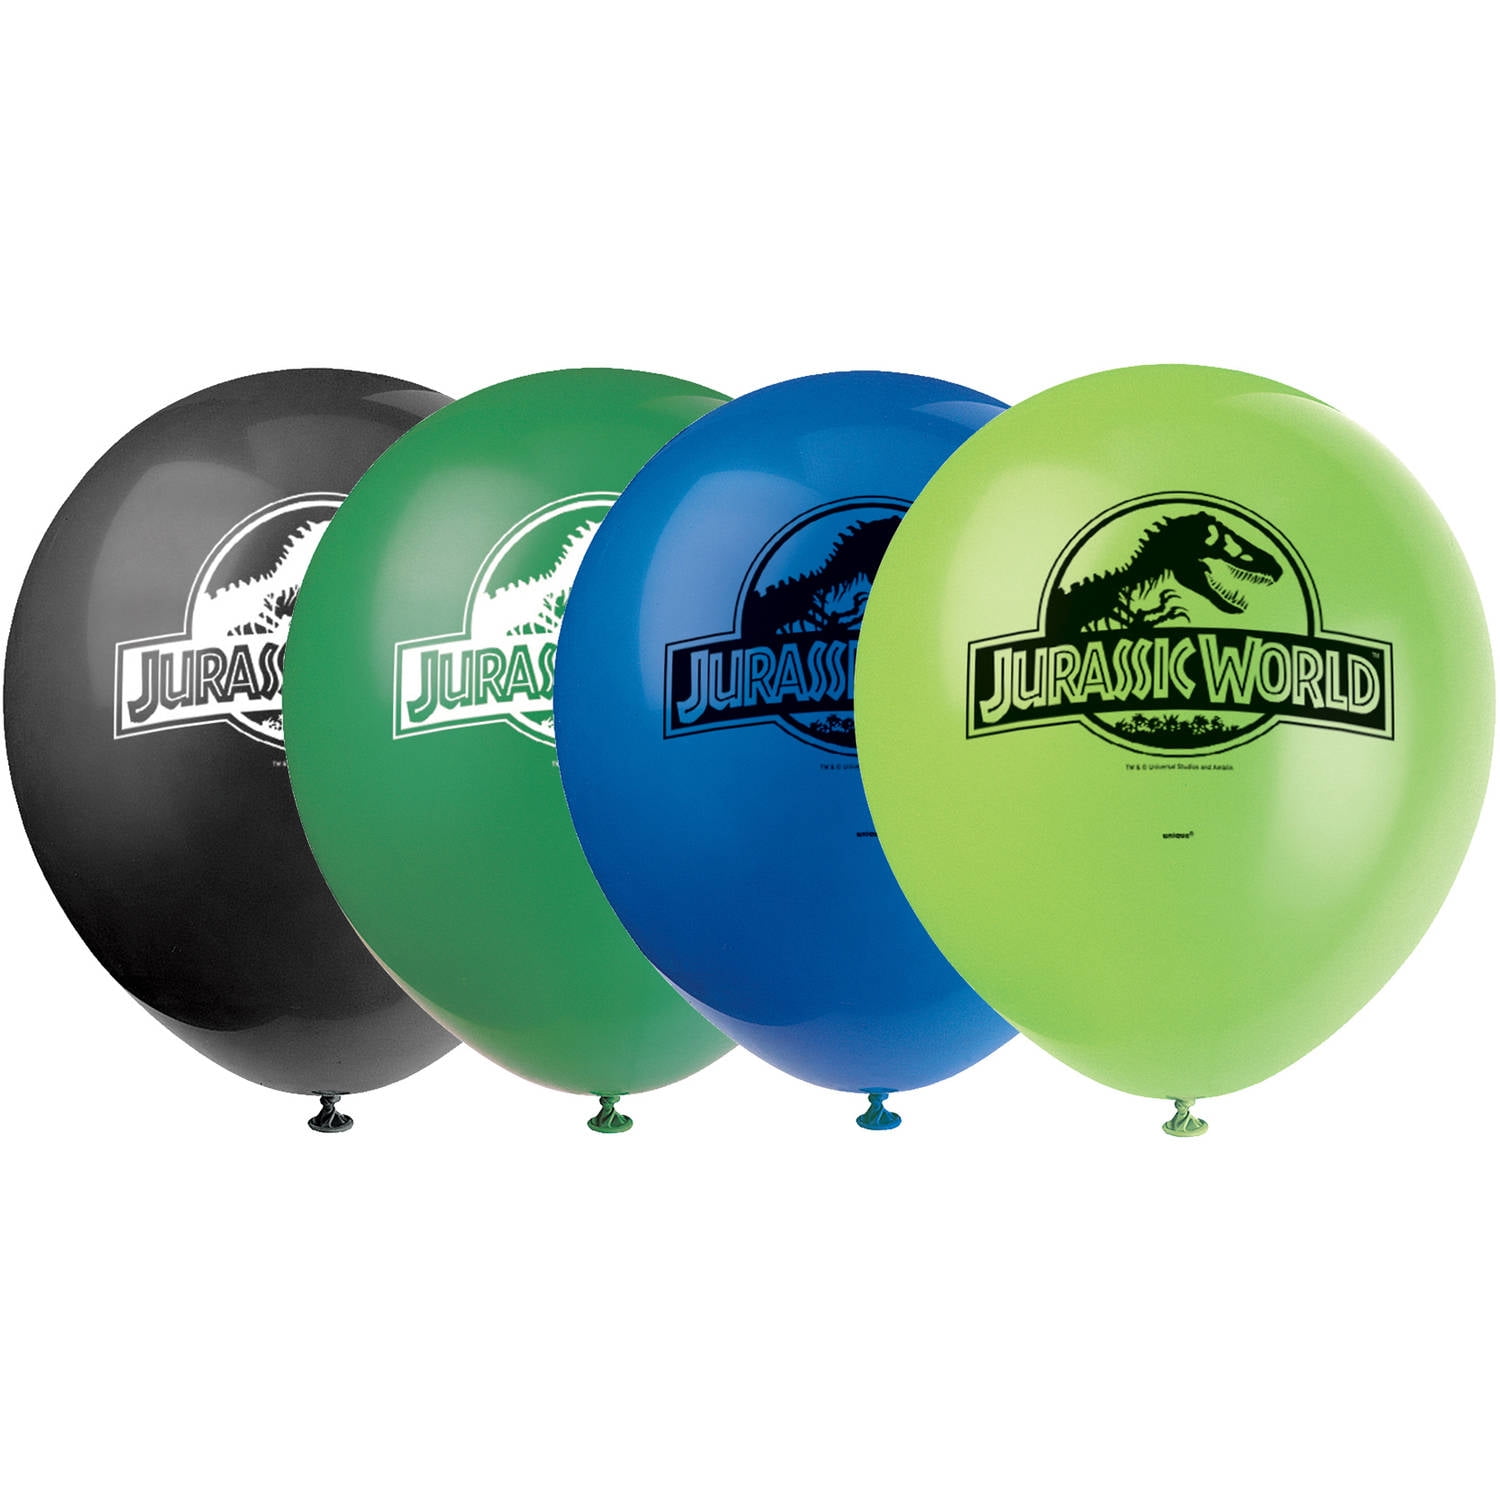 12 Latex Jurassic World Balloons 8ct